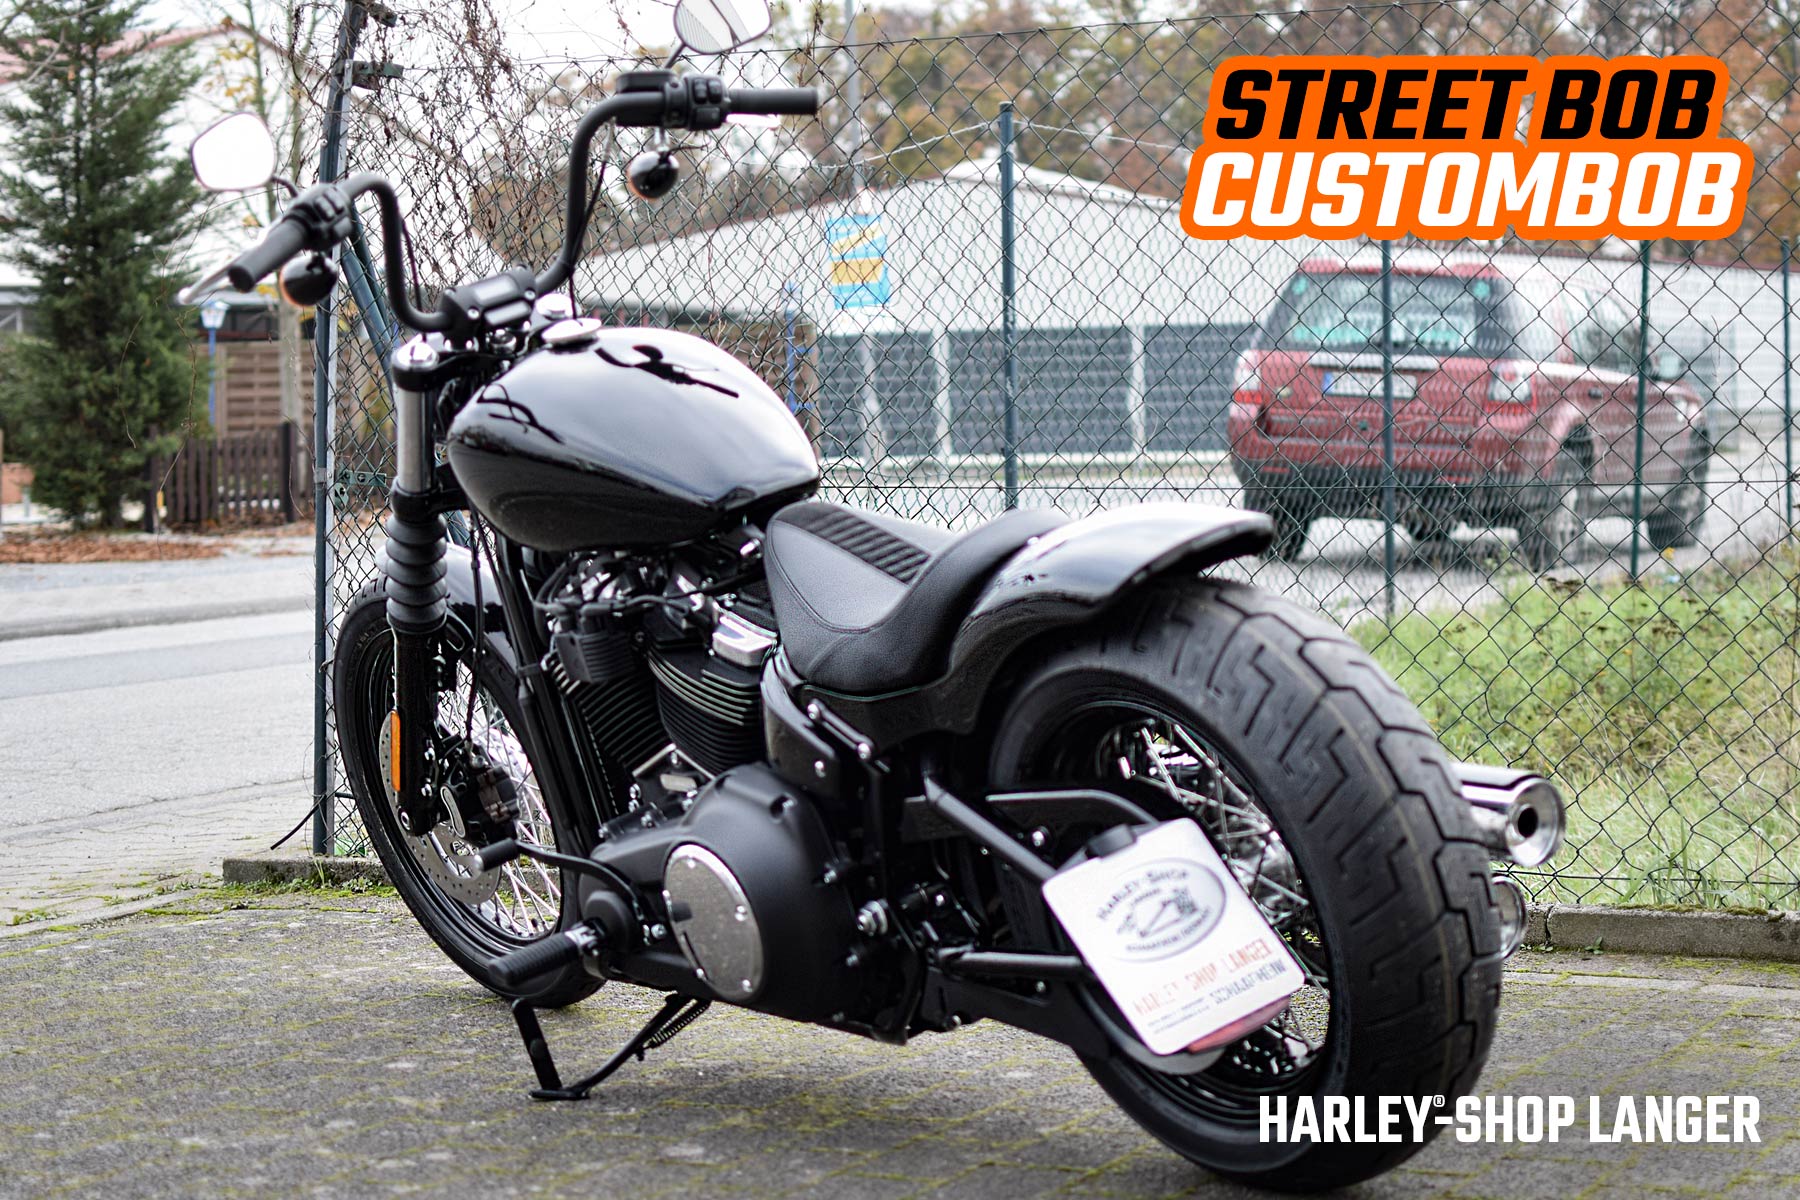 Harley-Shop Langer - Street Bob Custombob Umbau